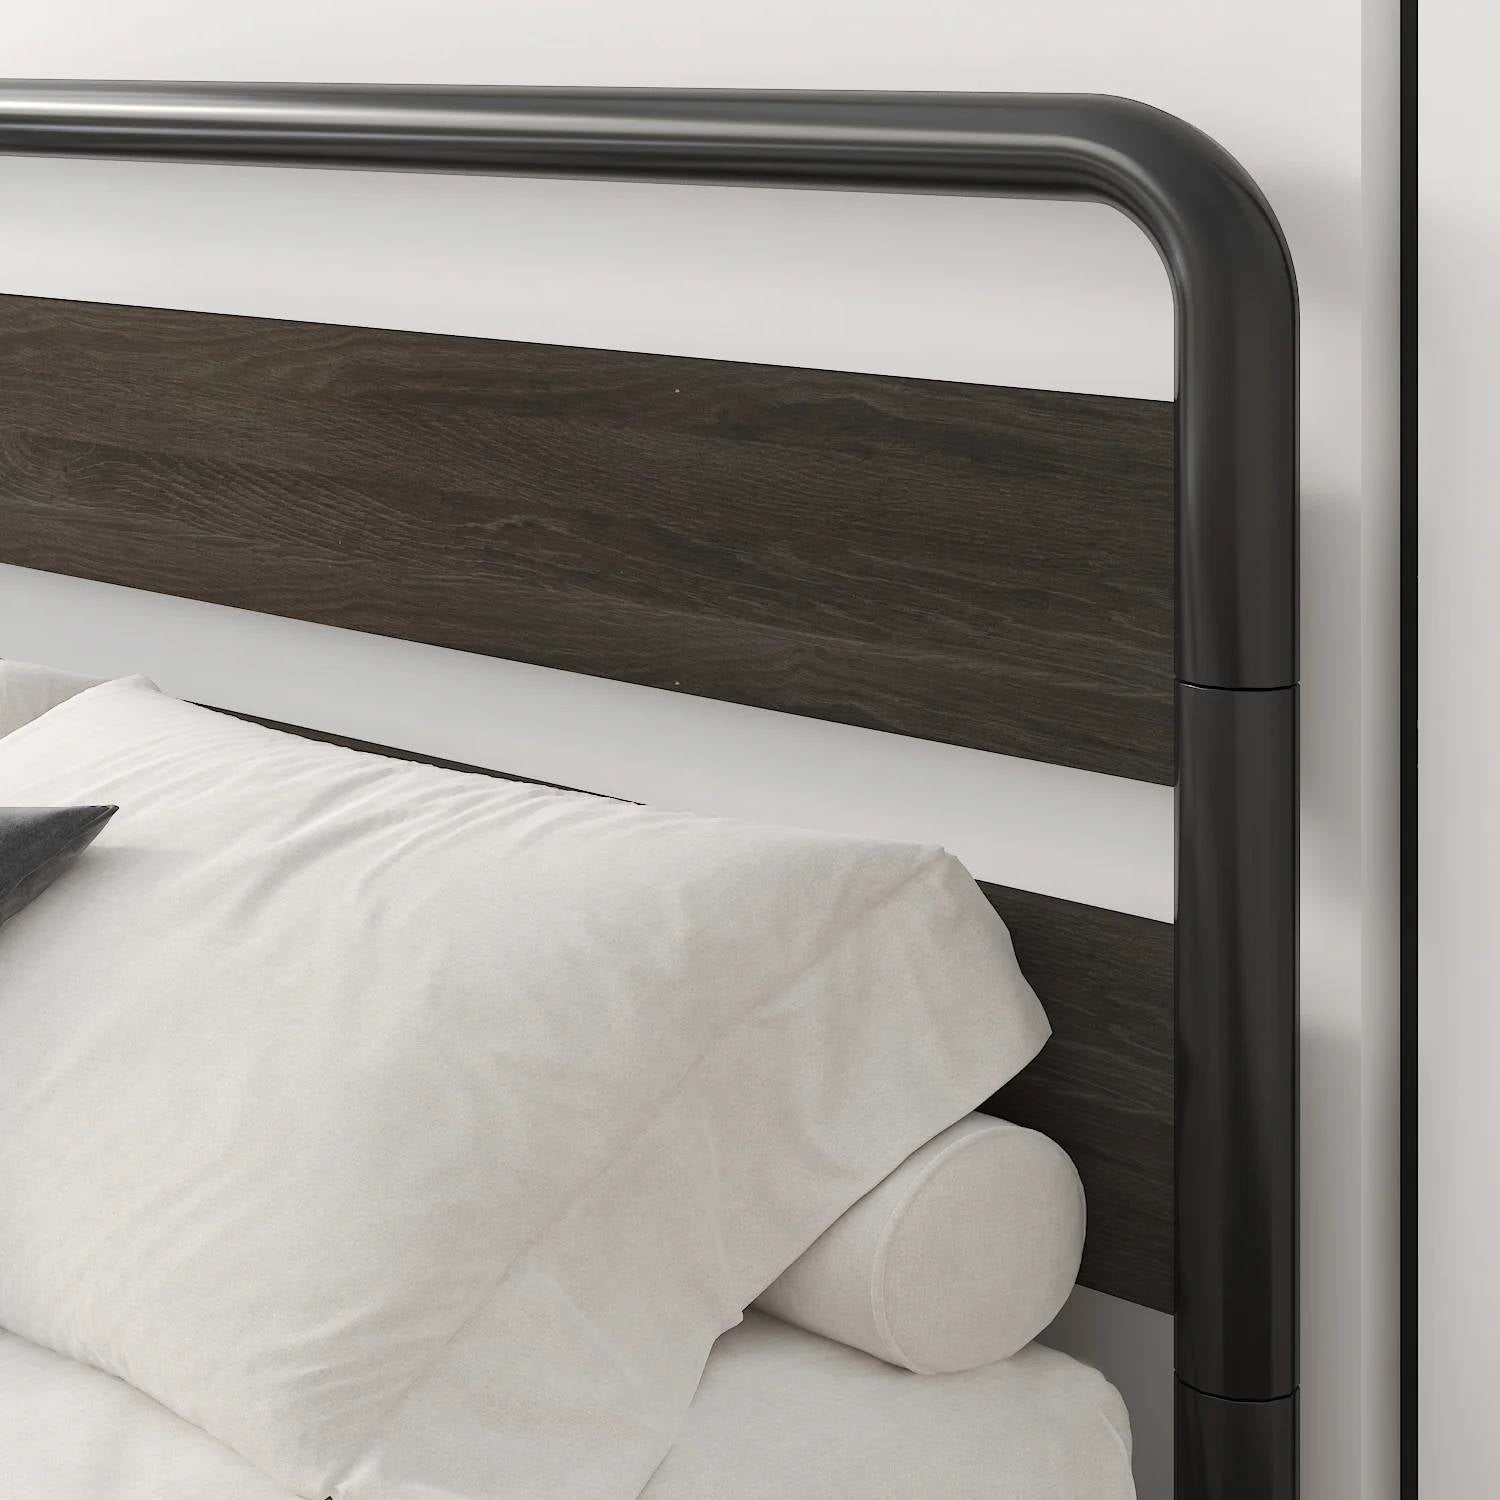 Bedroom > Bed Frames > Platform Beds - Queen Heavy Duty Round Metal Frame Platform Bed With Black Wood Panel Headboard